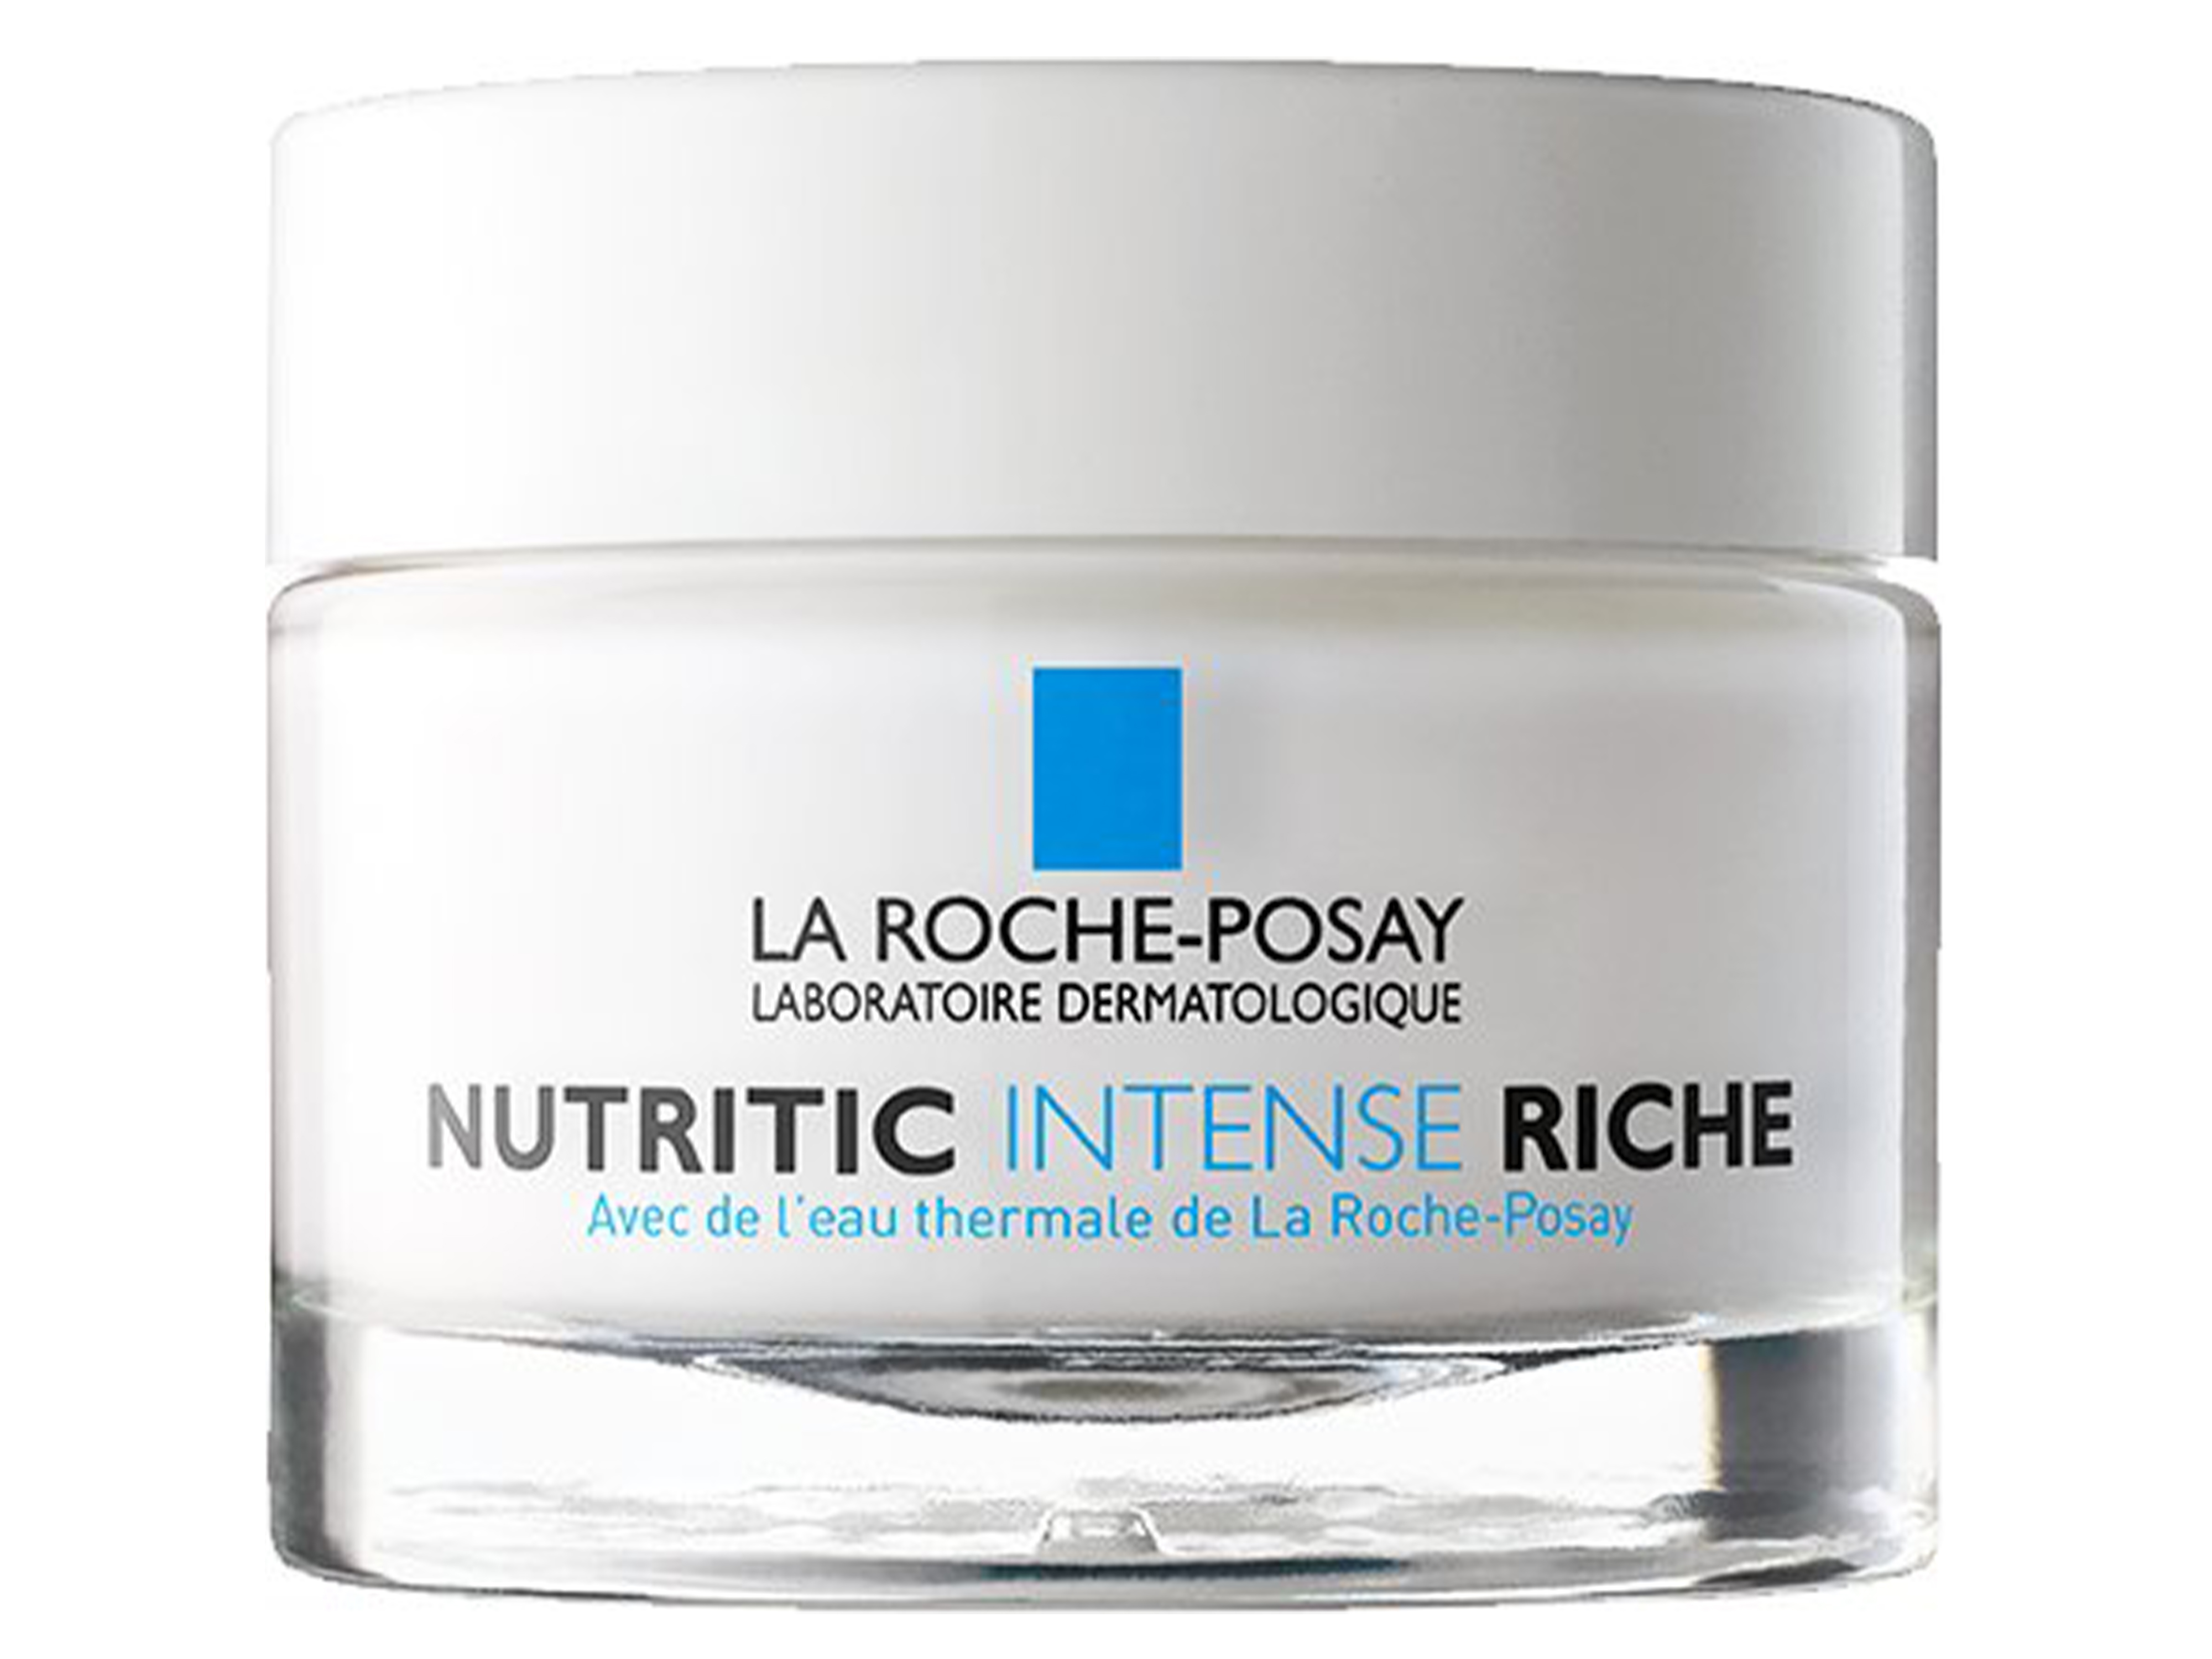 La Roche-Posay Nutritic Intense Riche Dagkrem, 50 ml